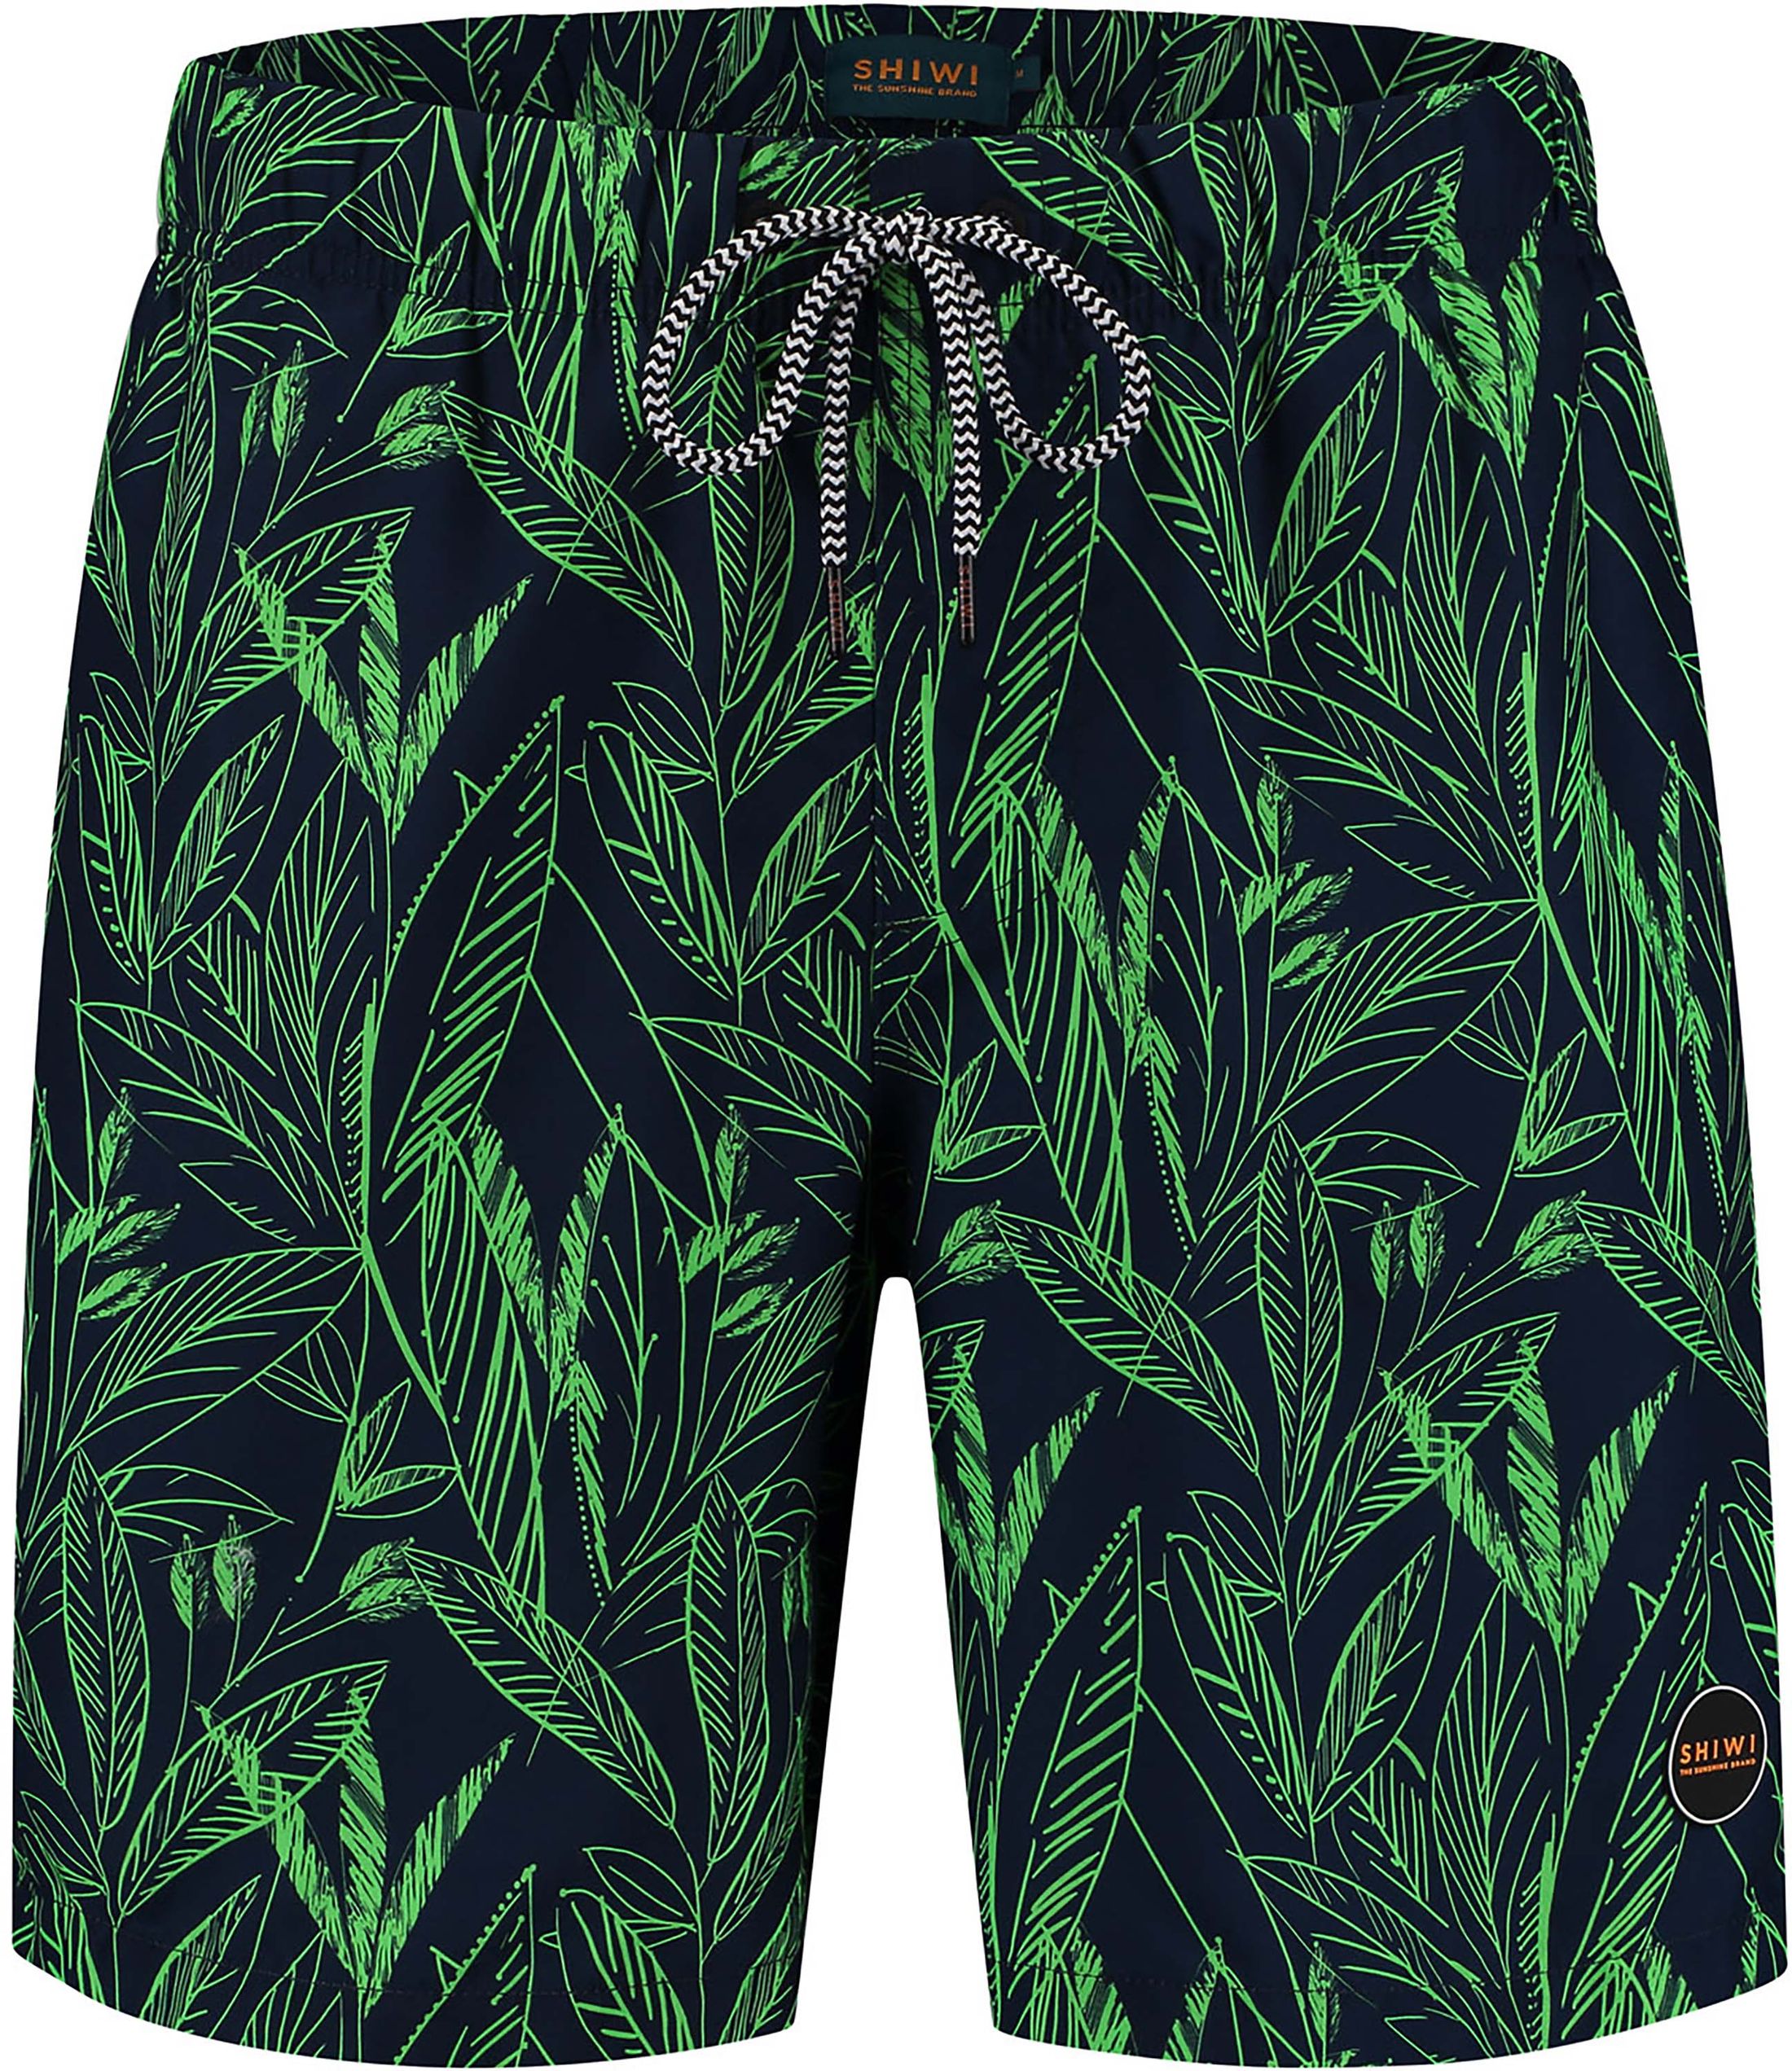 Shiwi Swimshorts Leaves Dark Green Green size S